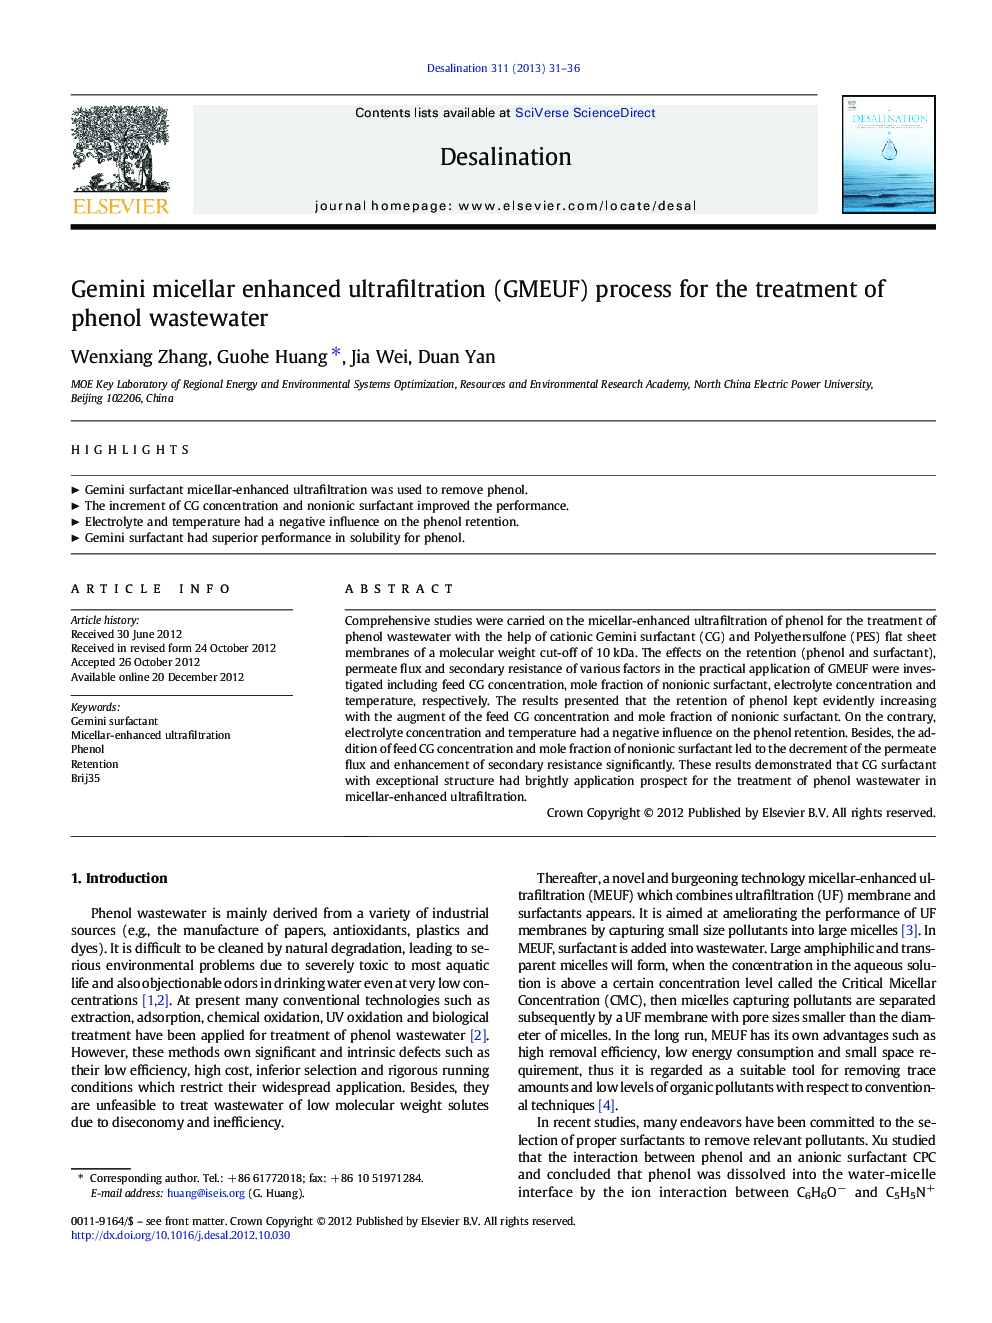 Gemini micellar enhanced ultrafiltration (GMEUF) process for the treatment of phenol wastewater